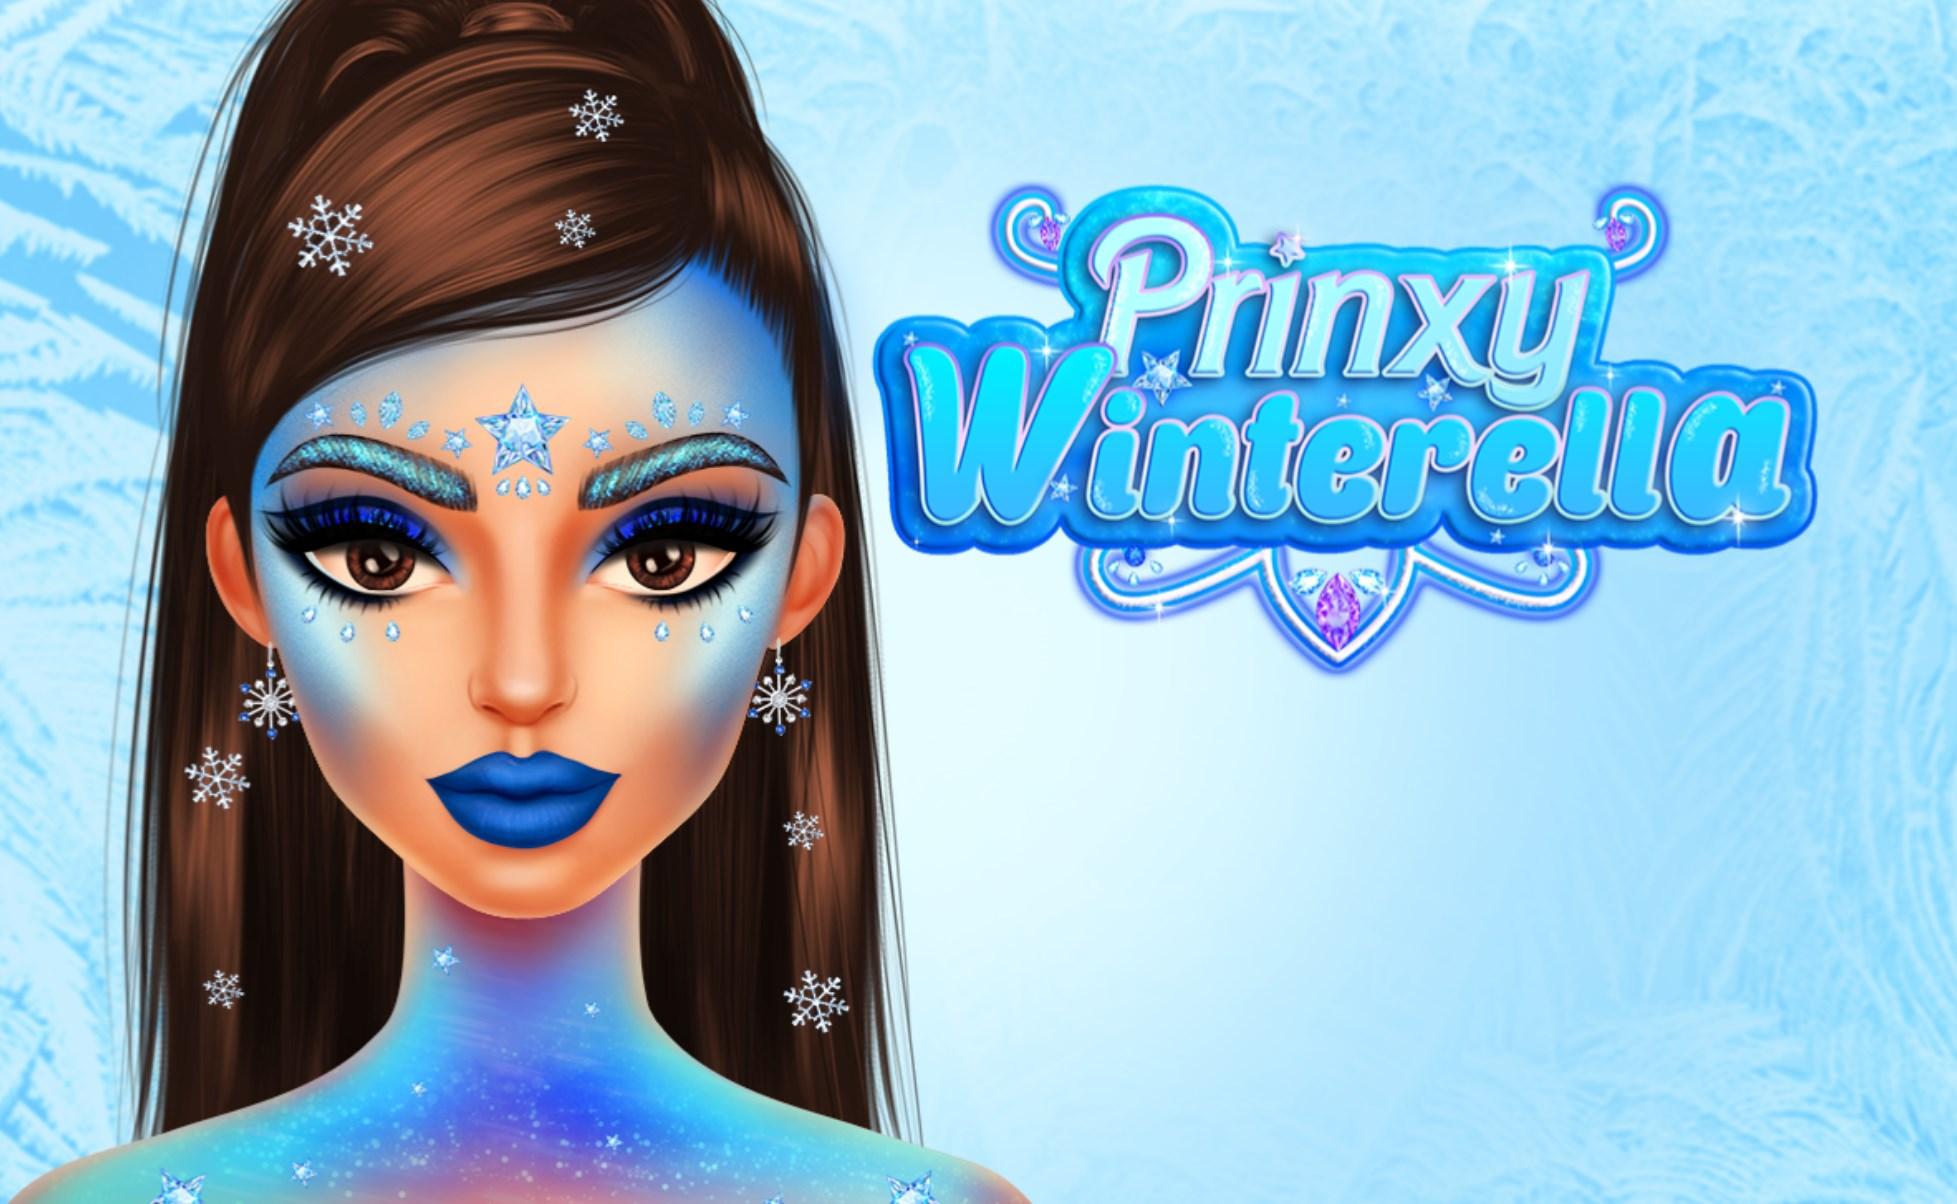 Game Prinxy Winterella preview